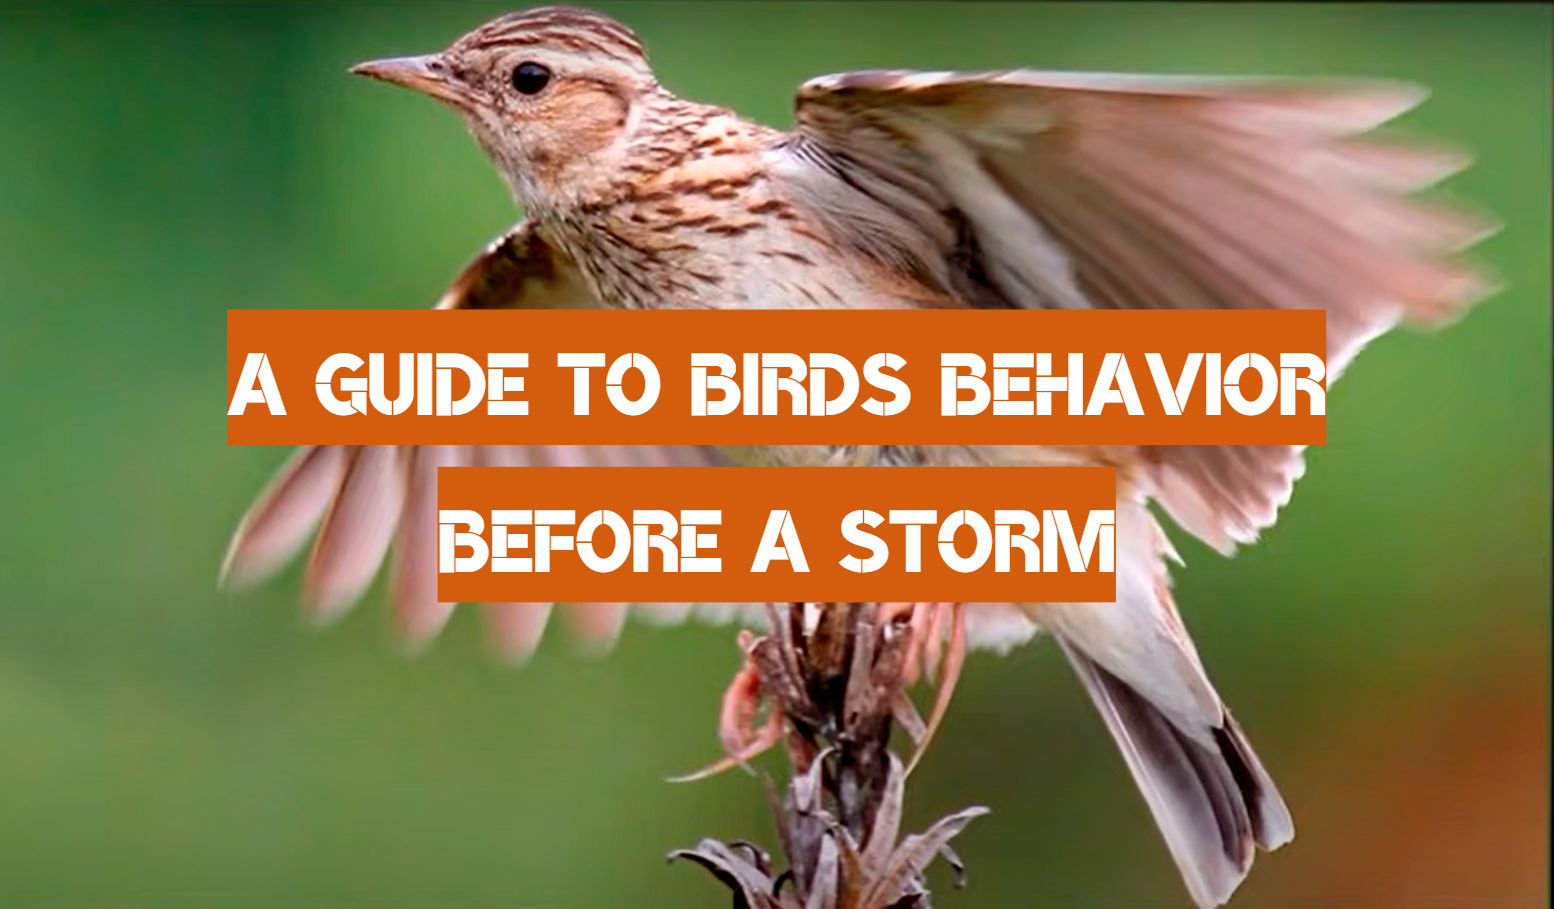 A Guide to Birds Behavior Before a Storm